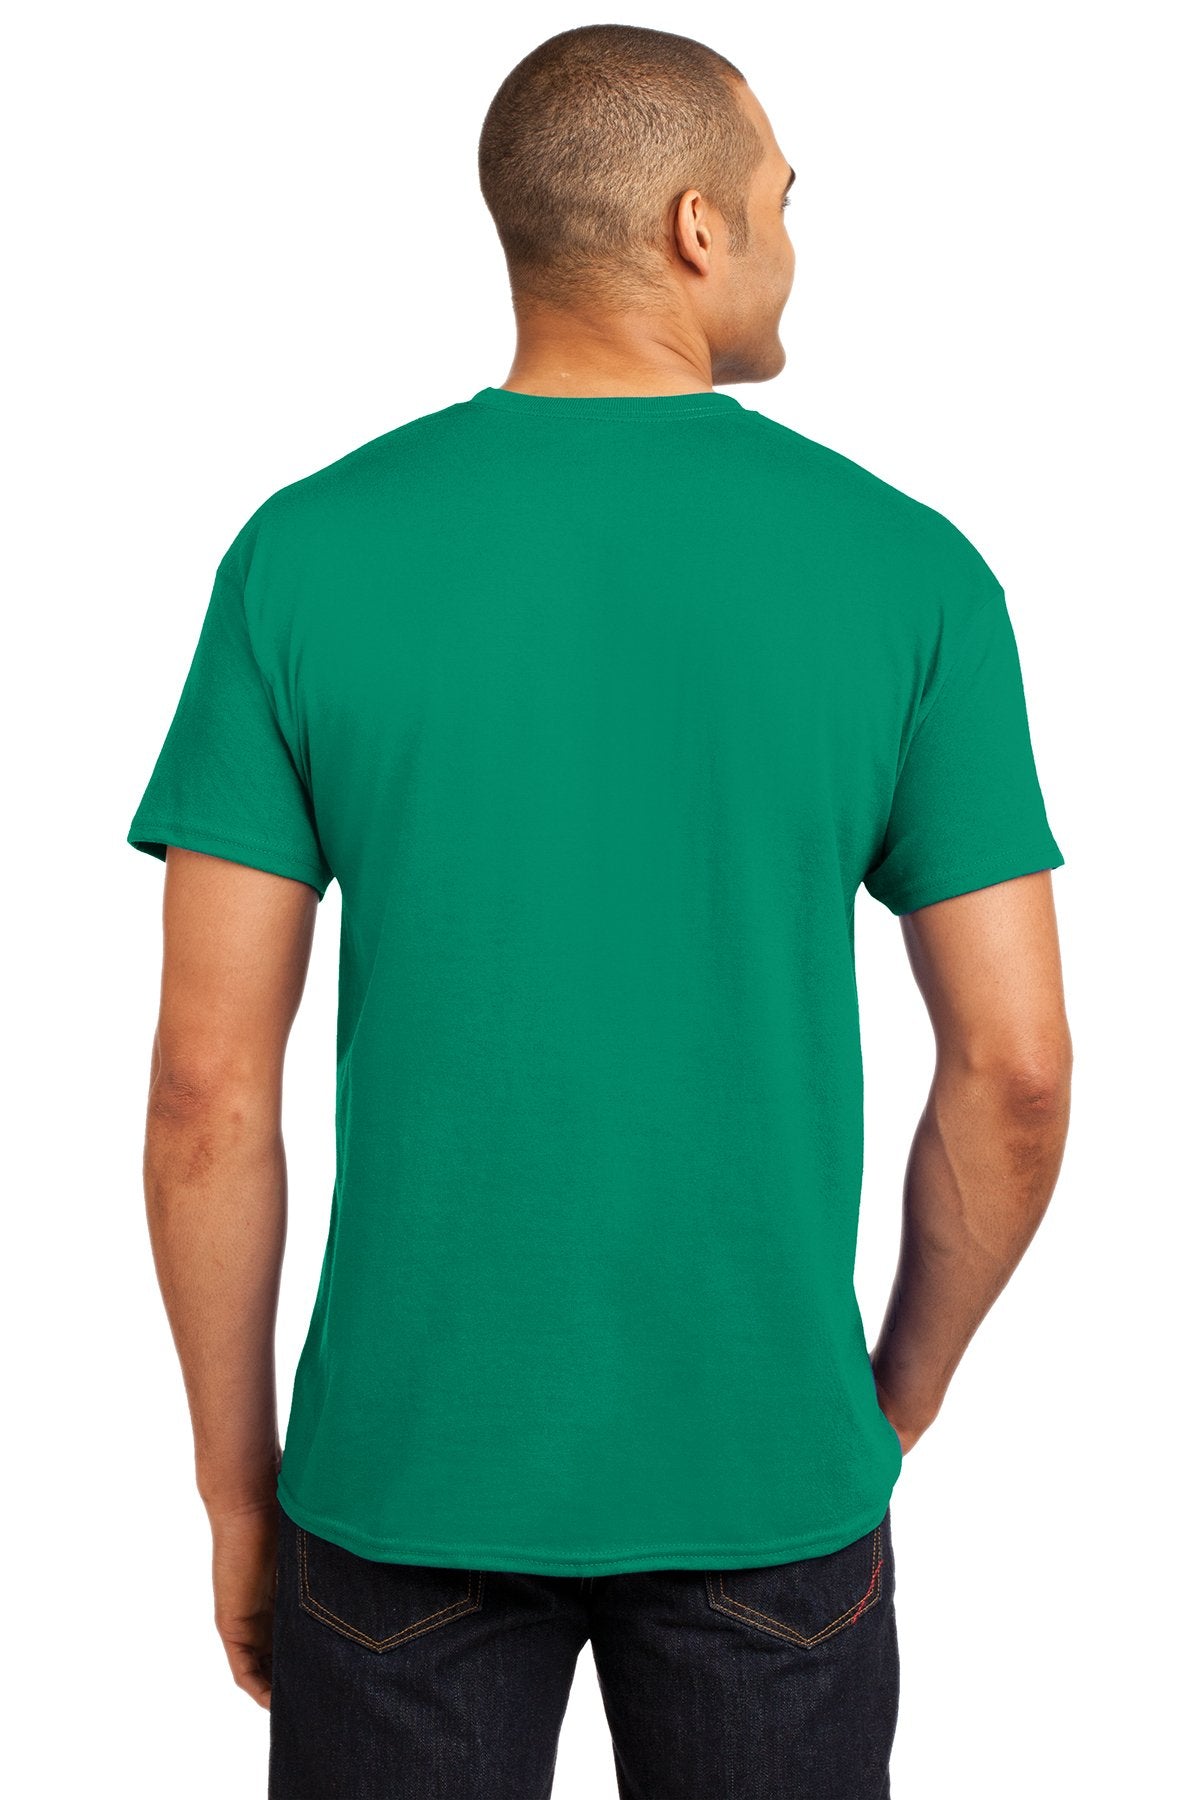 hanes ecosmart 50 50 cotton/poly t shirt 5170 kelly green